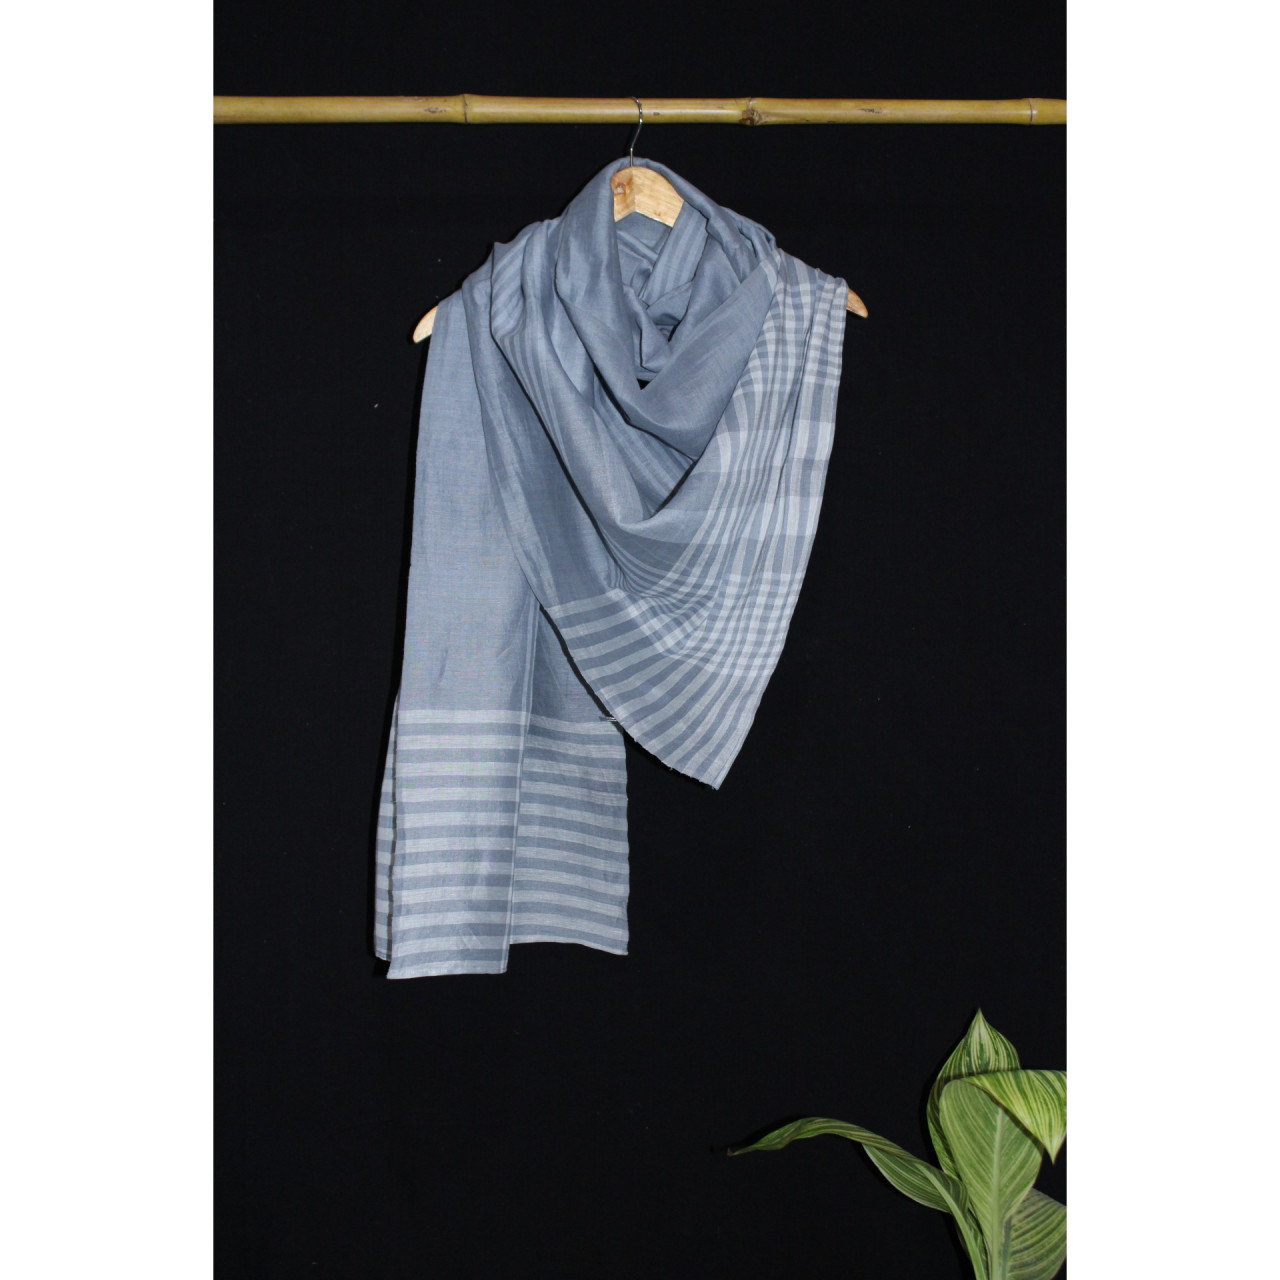 (2156) Khadi  and linen Azo-free dyed stole from Shantipur - Grey, white, stripes, plain